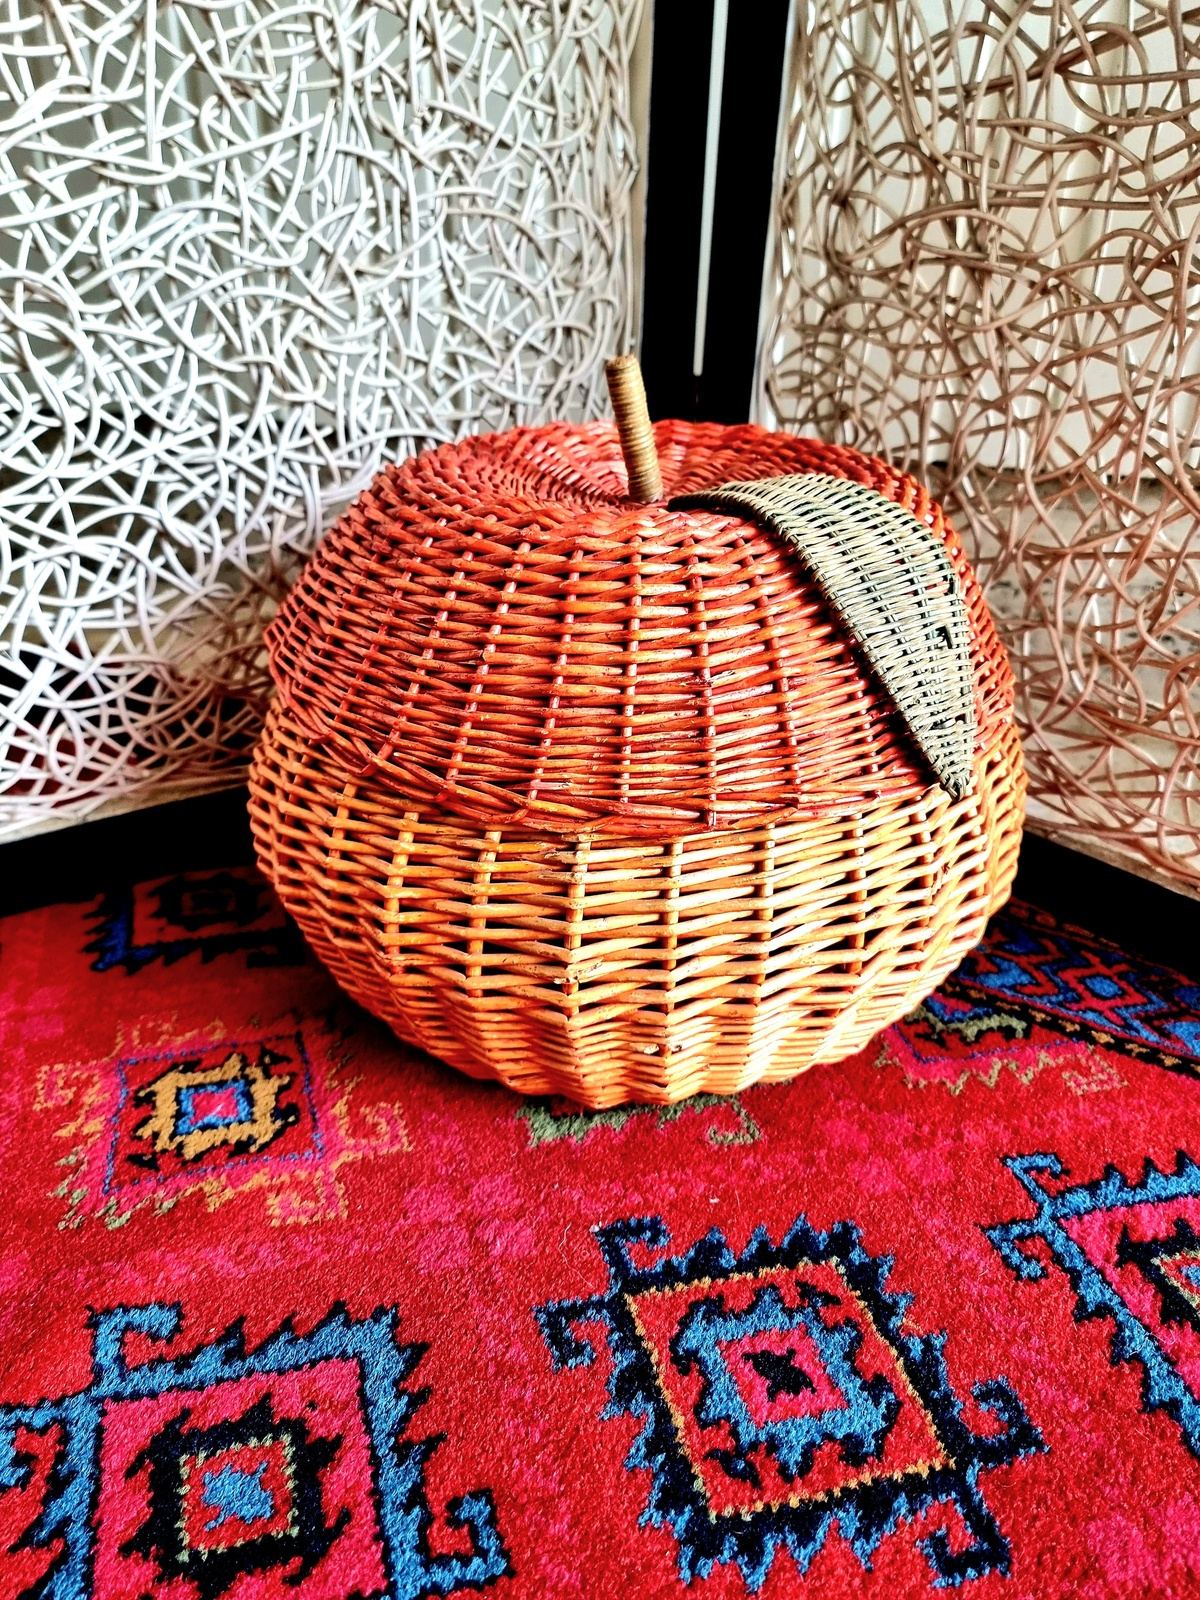 Vintage Wicker Rattan basket with lid